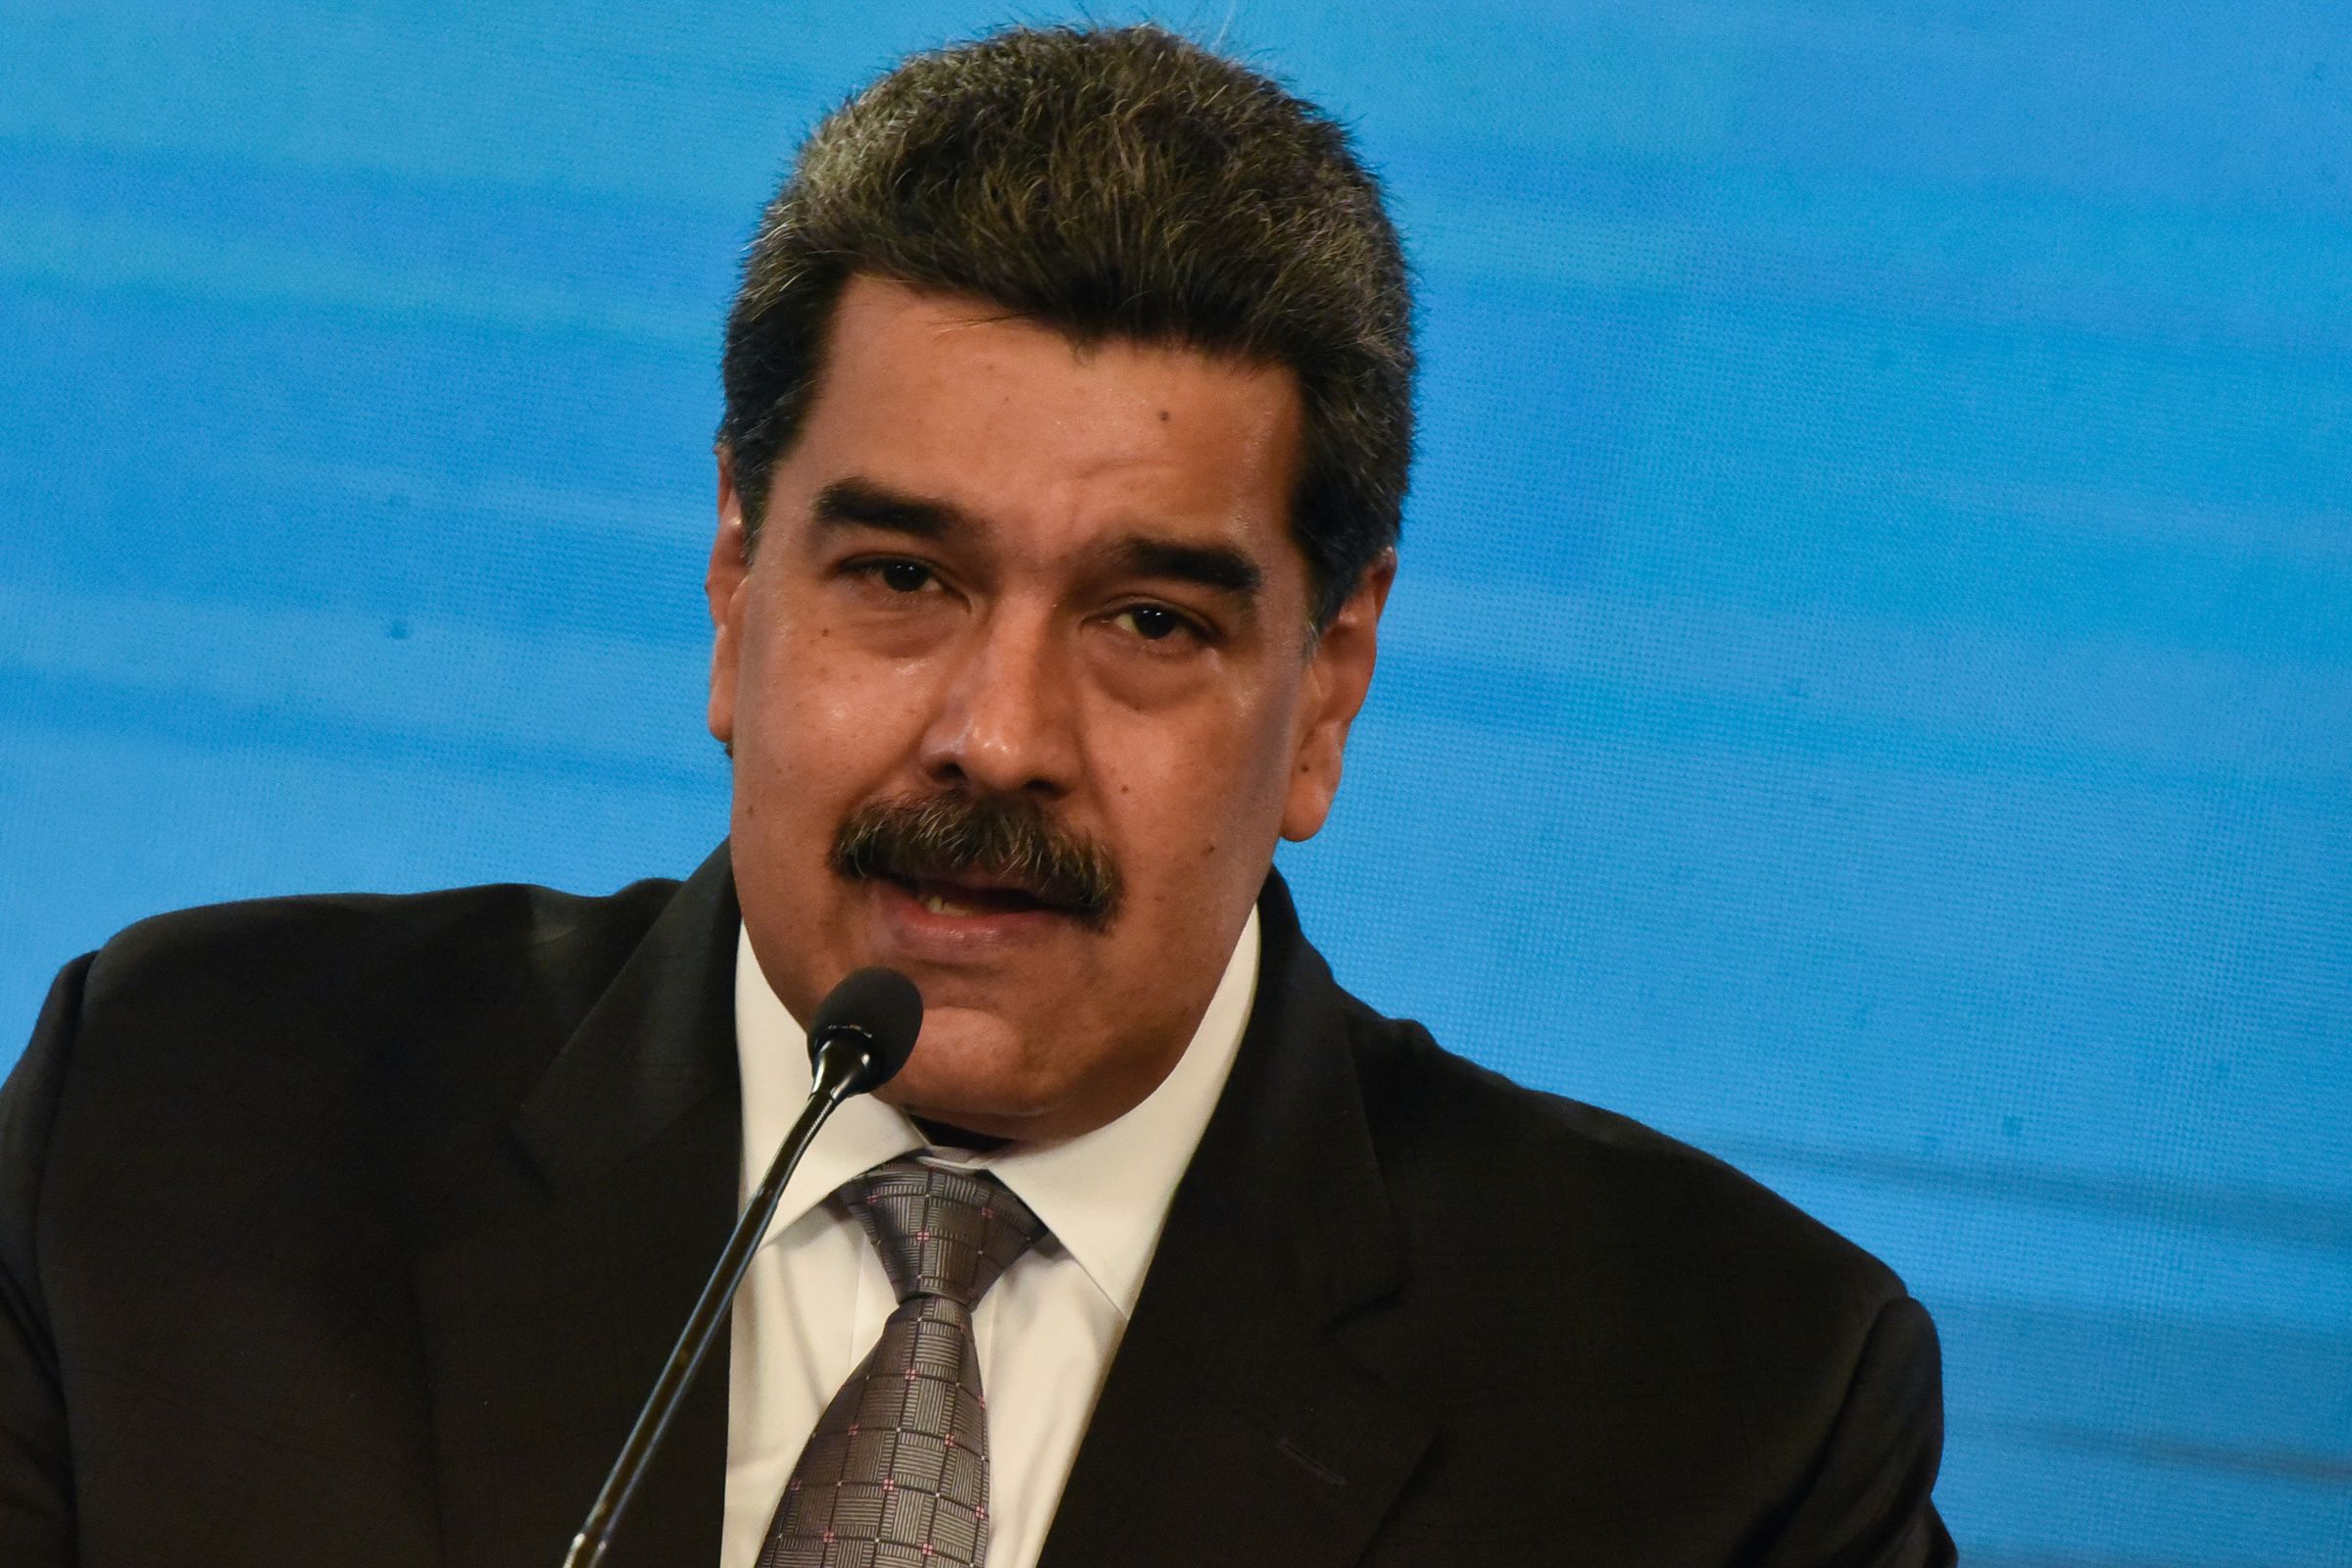 Nicolas Maduro Announces Launch of Vaccination Campaign